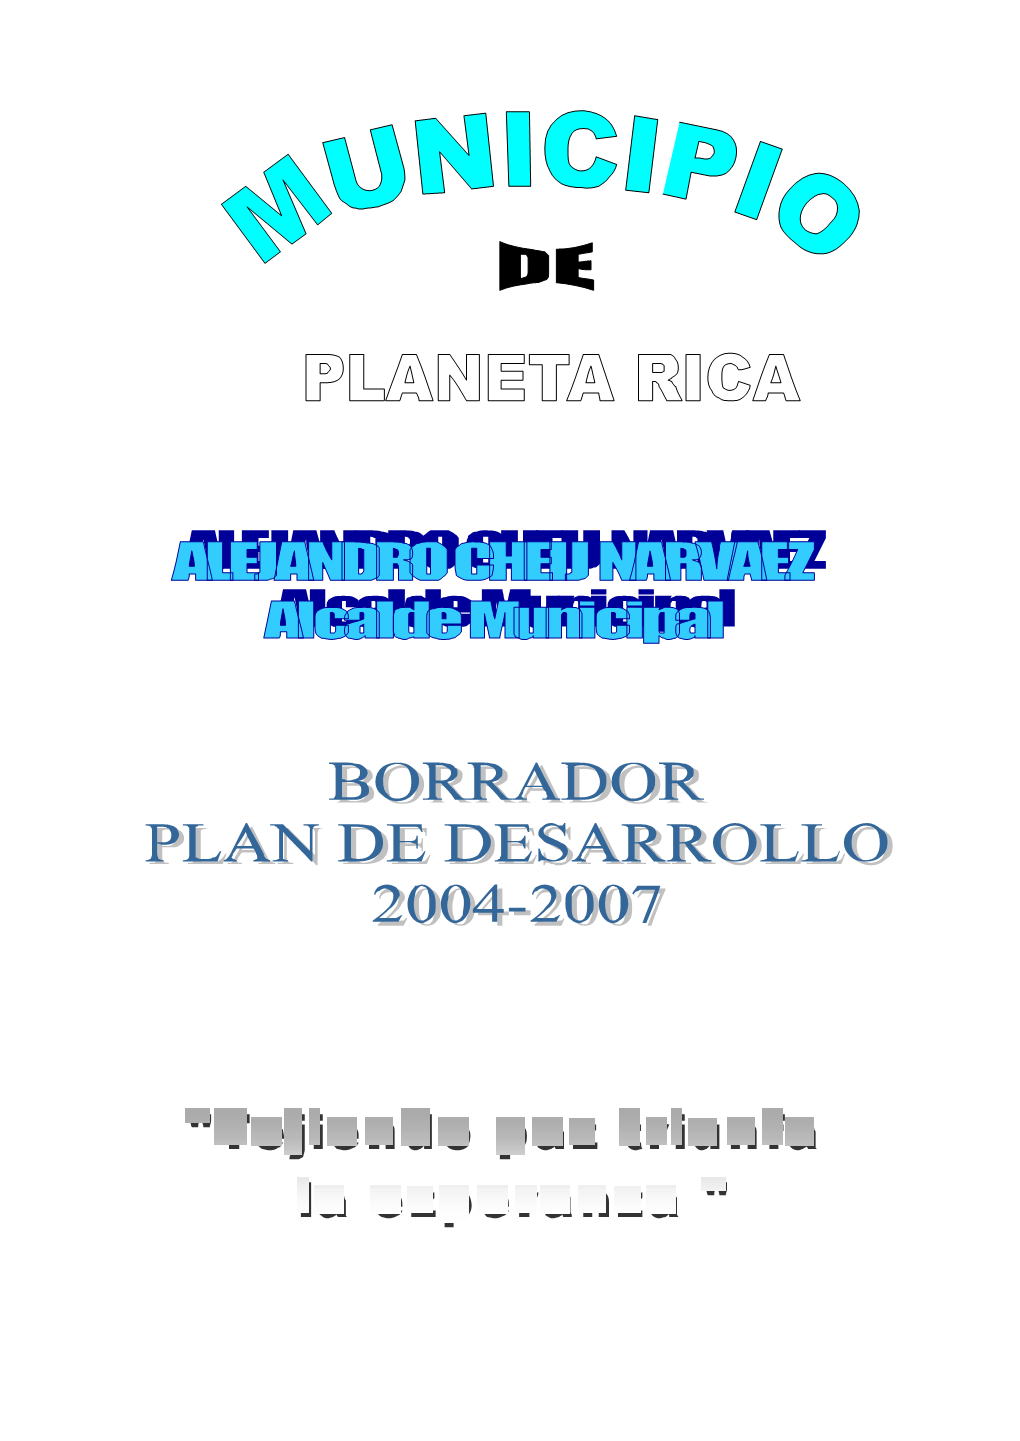 Plan De Desarrollo De Planeta Rica